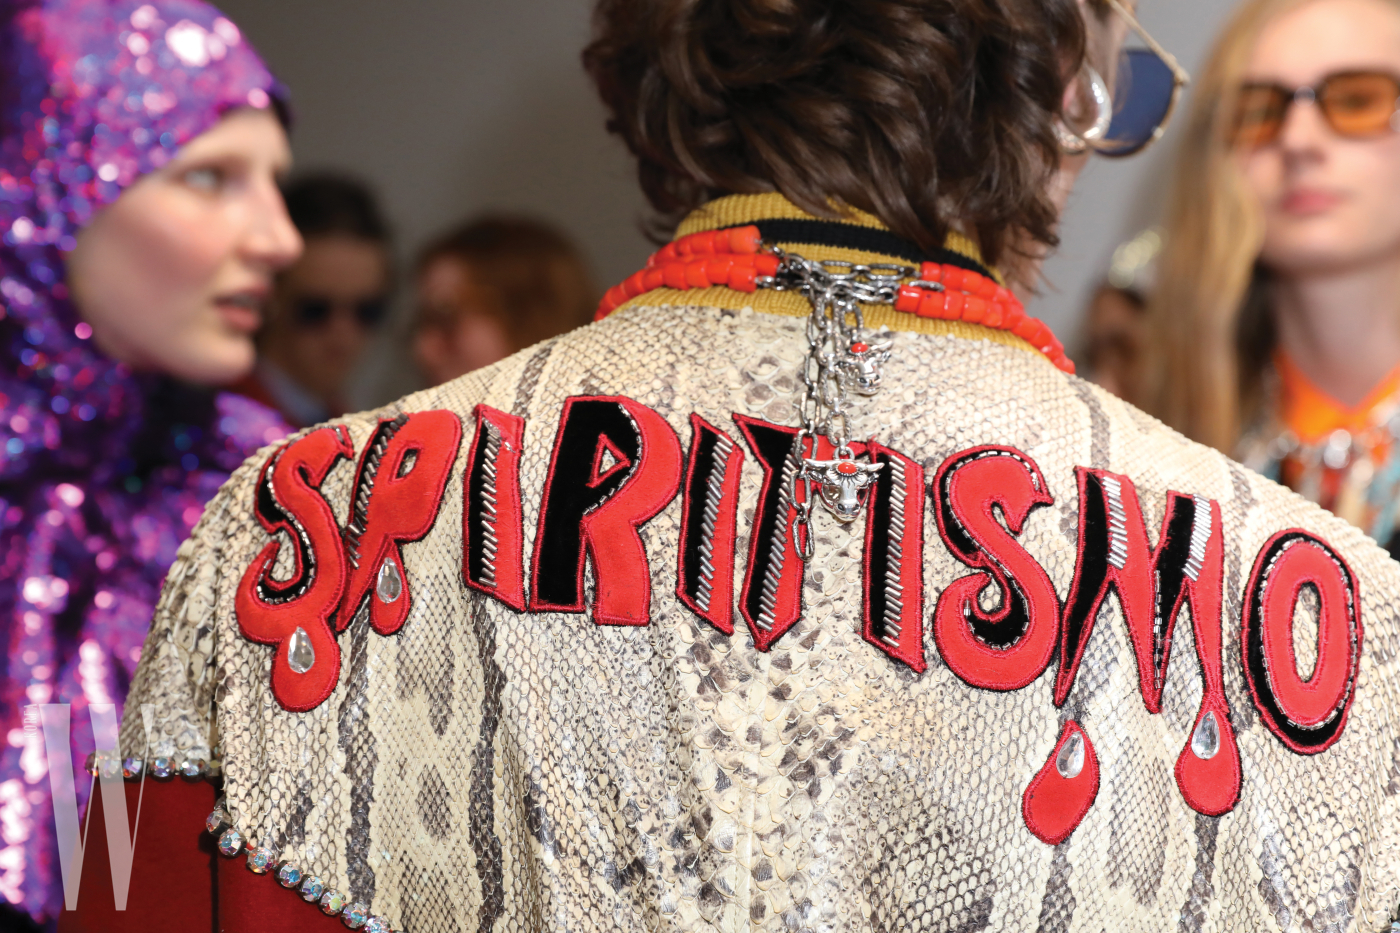  ‘Spiritismo’라는 신조어를 통해 패션의 저항 정신을 드러낸 남성 컬렉션 재킷.